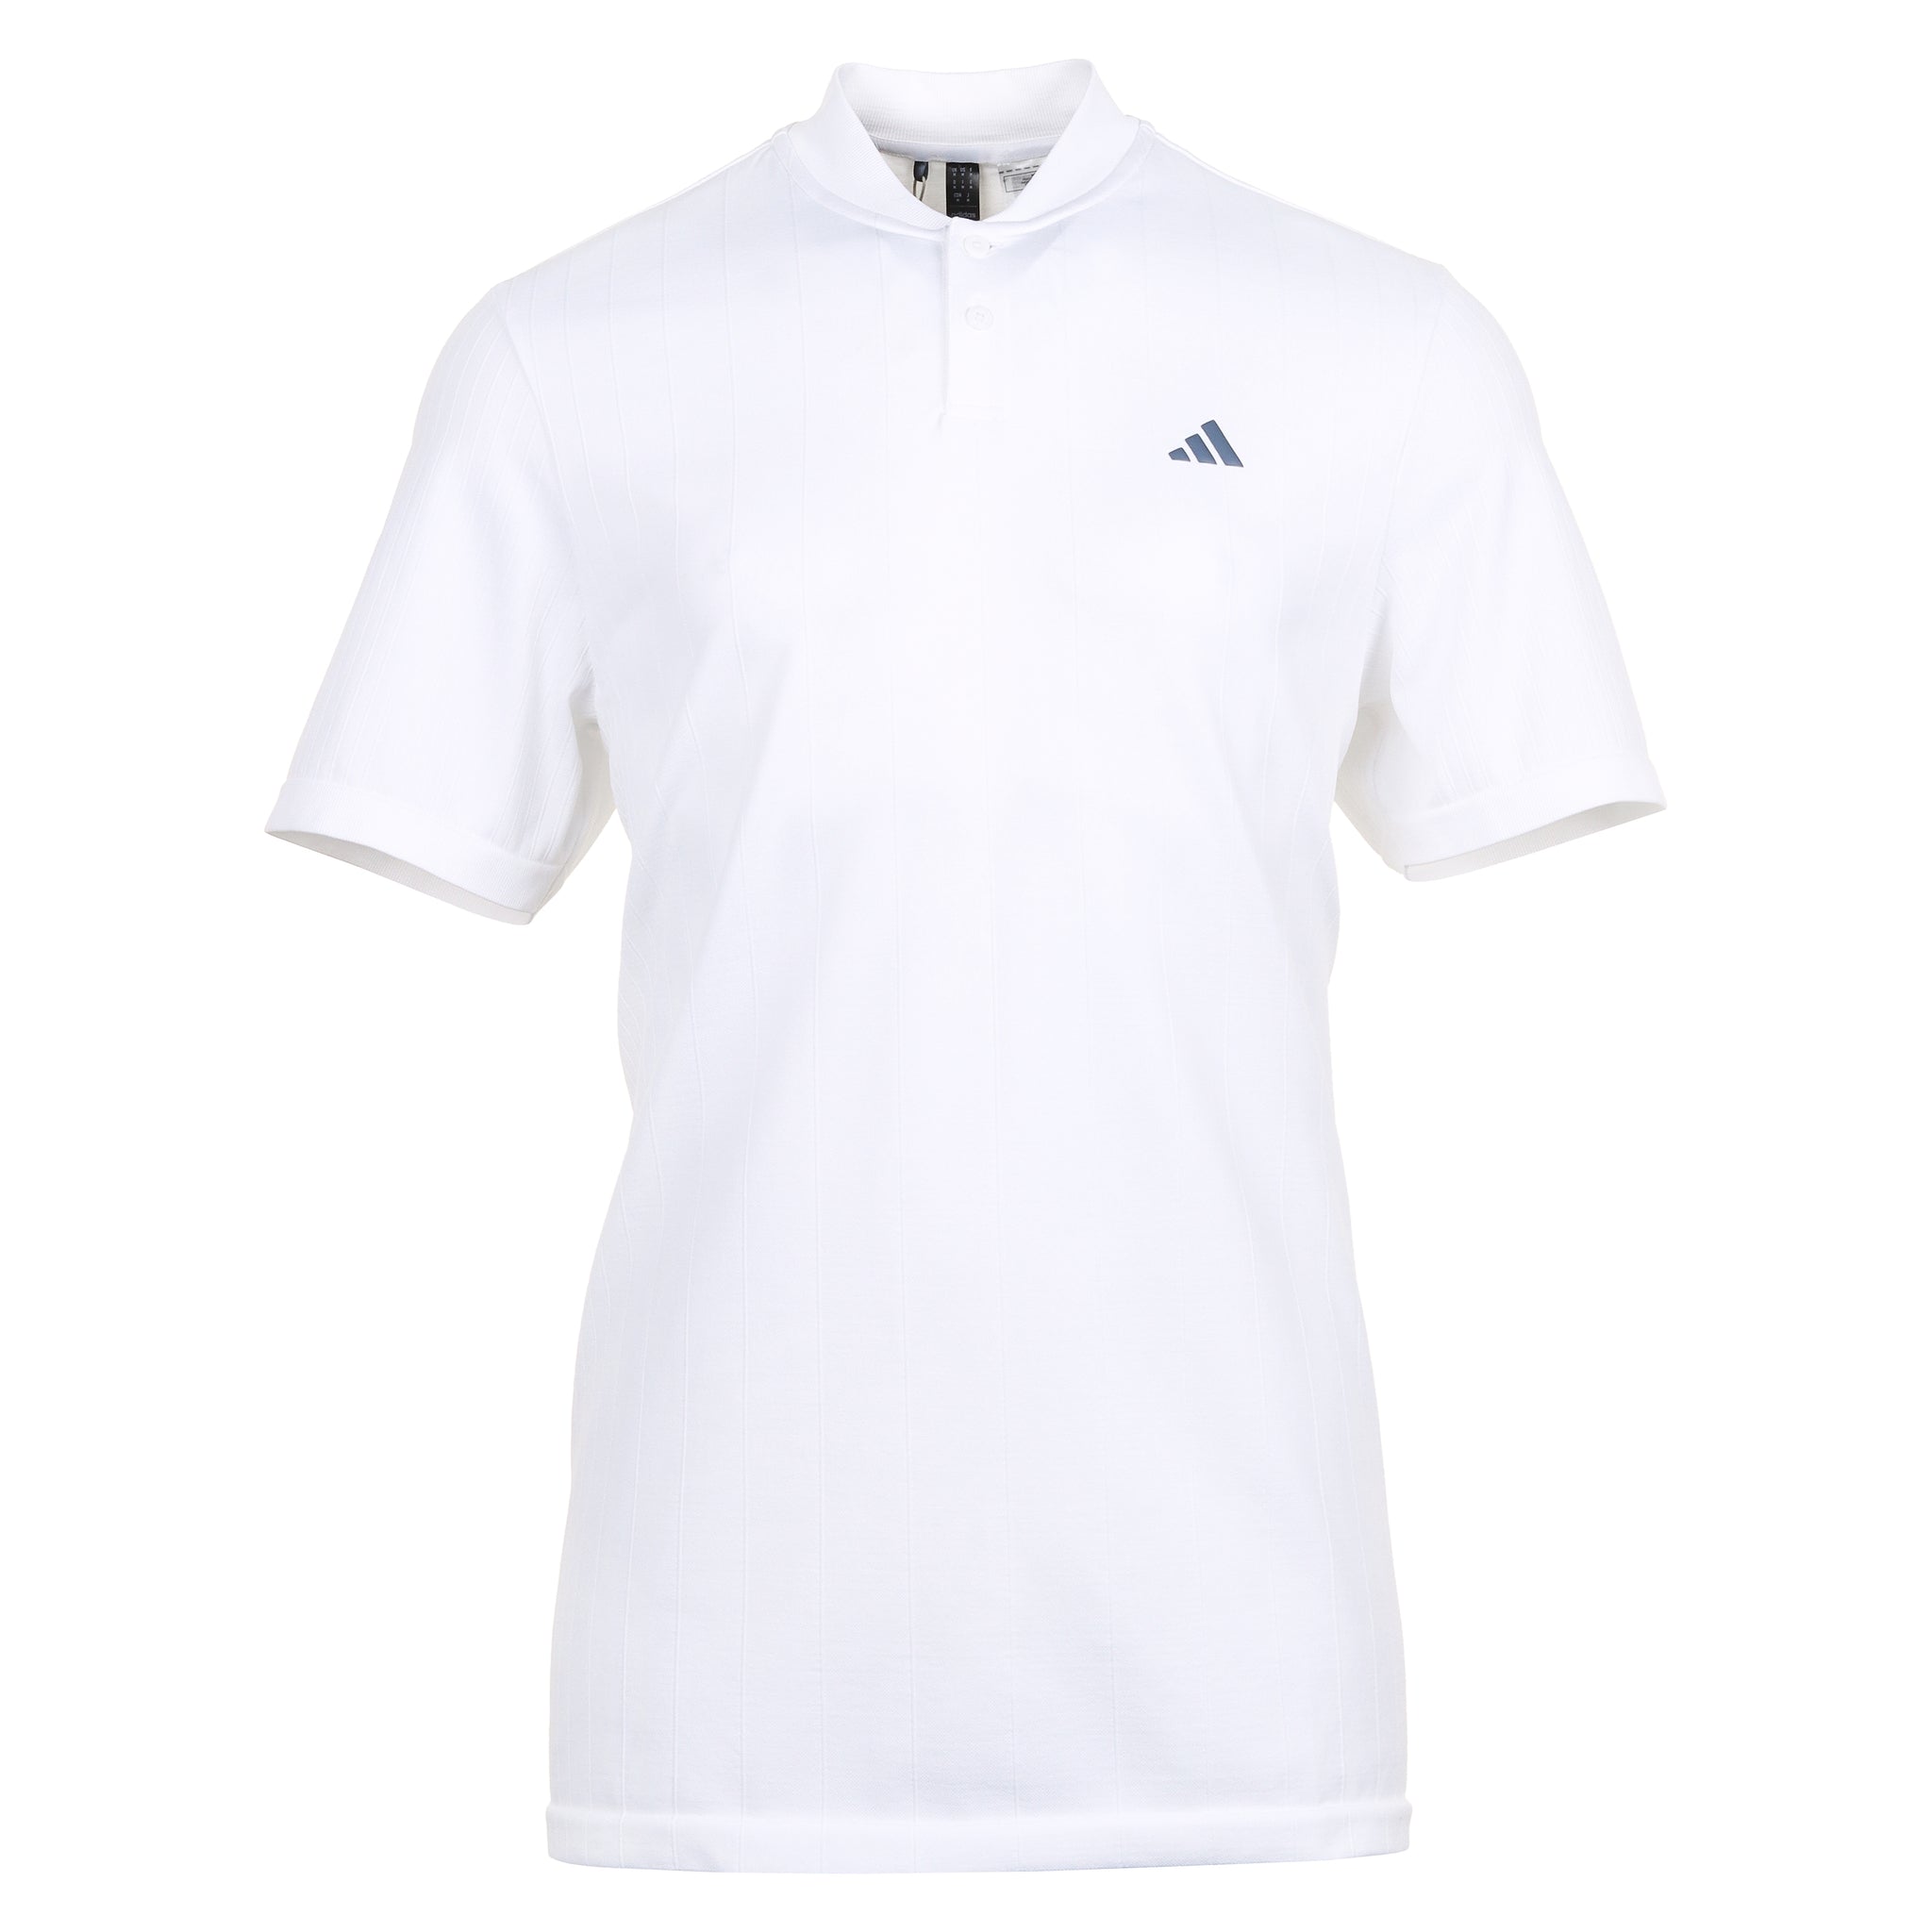 adidas-golf-ultimate365-tour-primeknit-shirt-iu4423-white